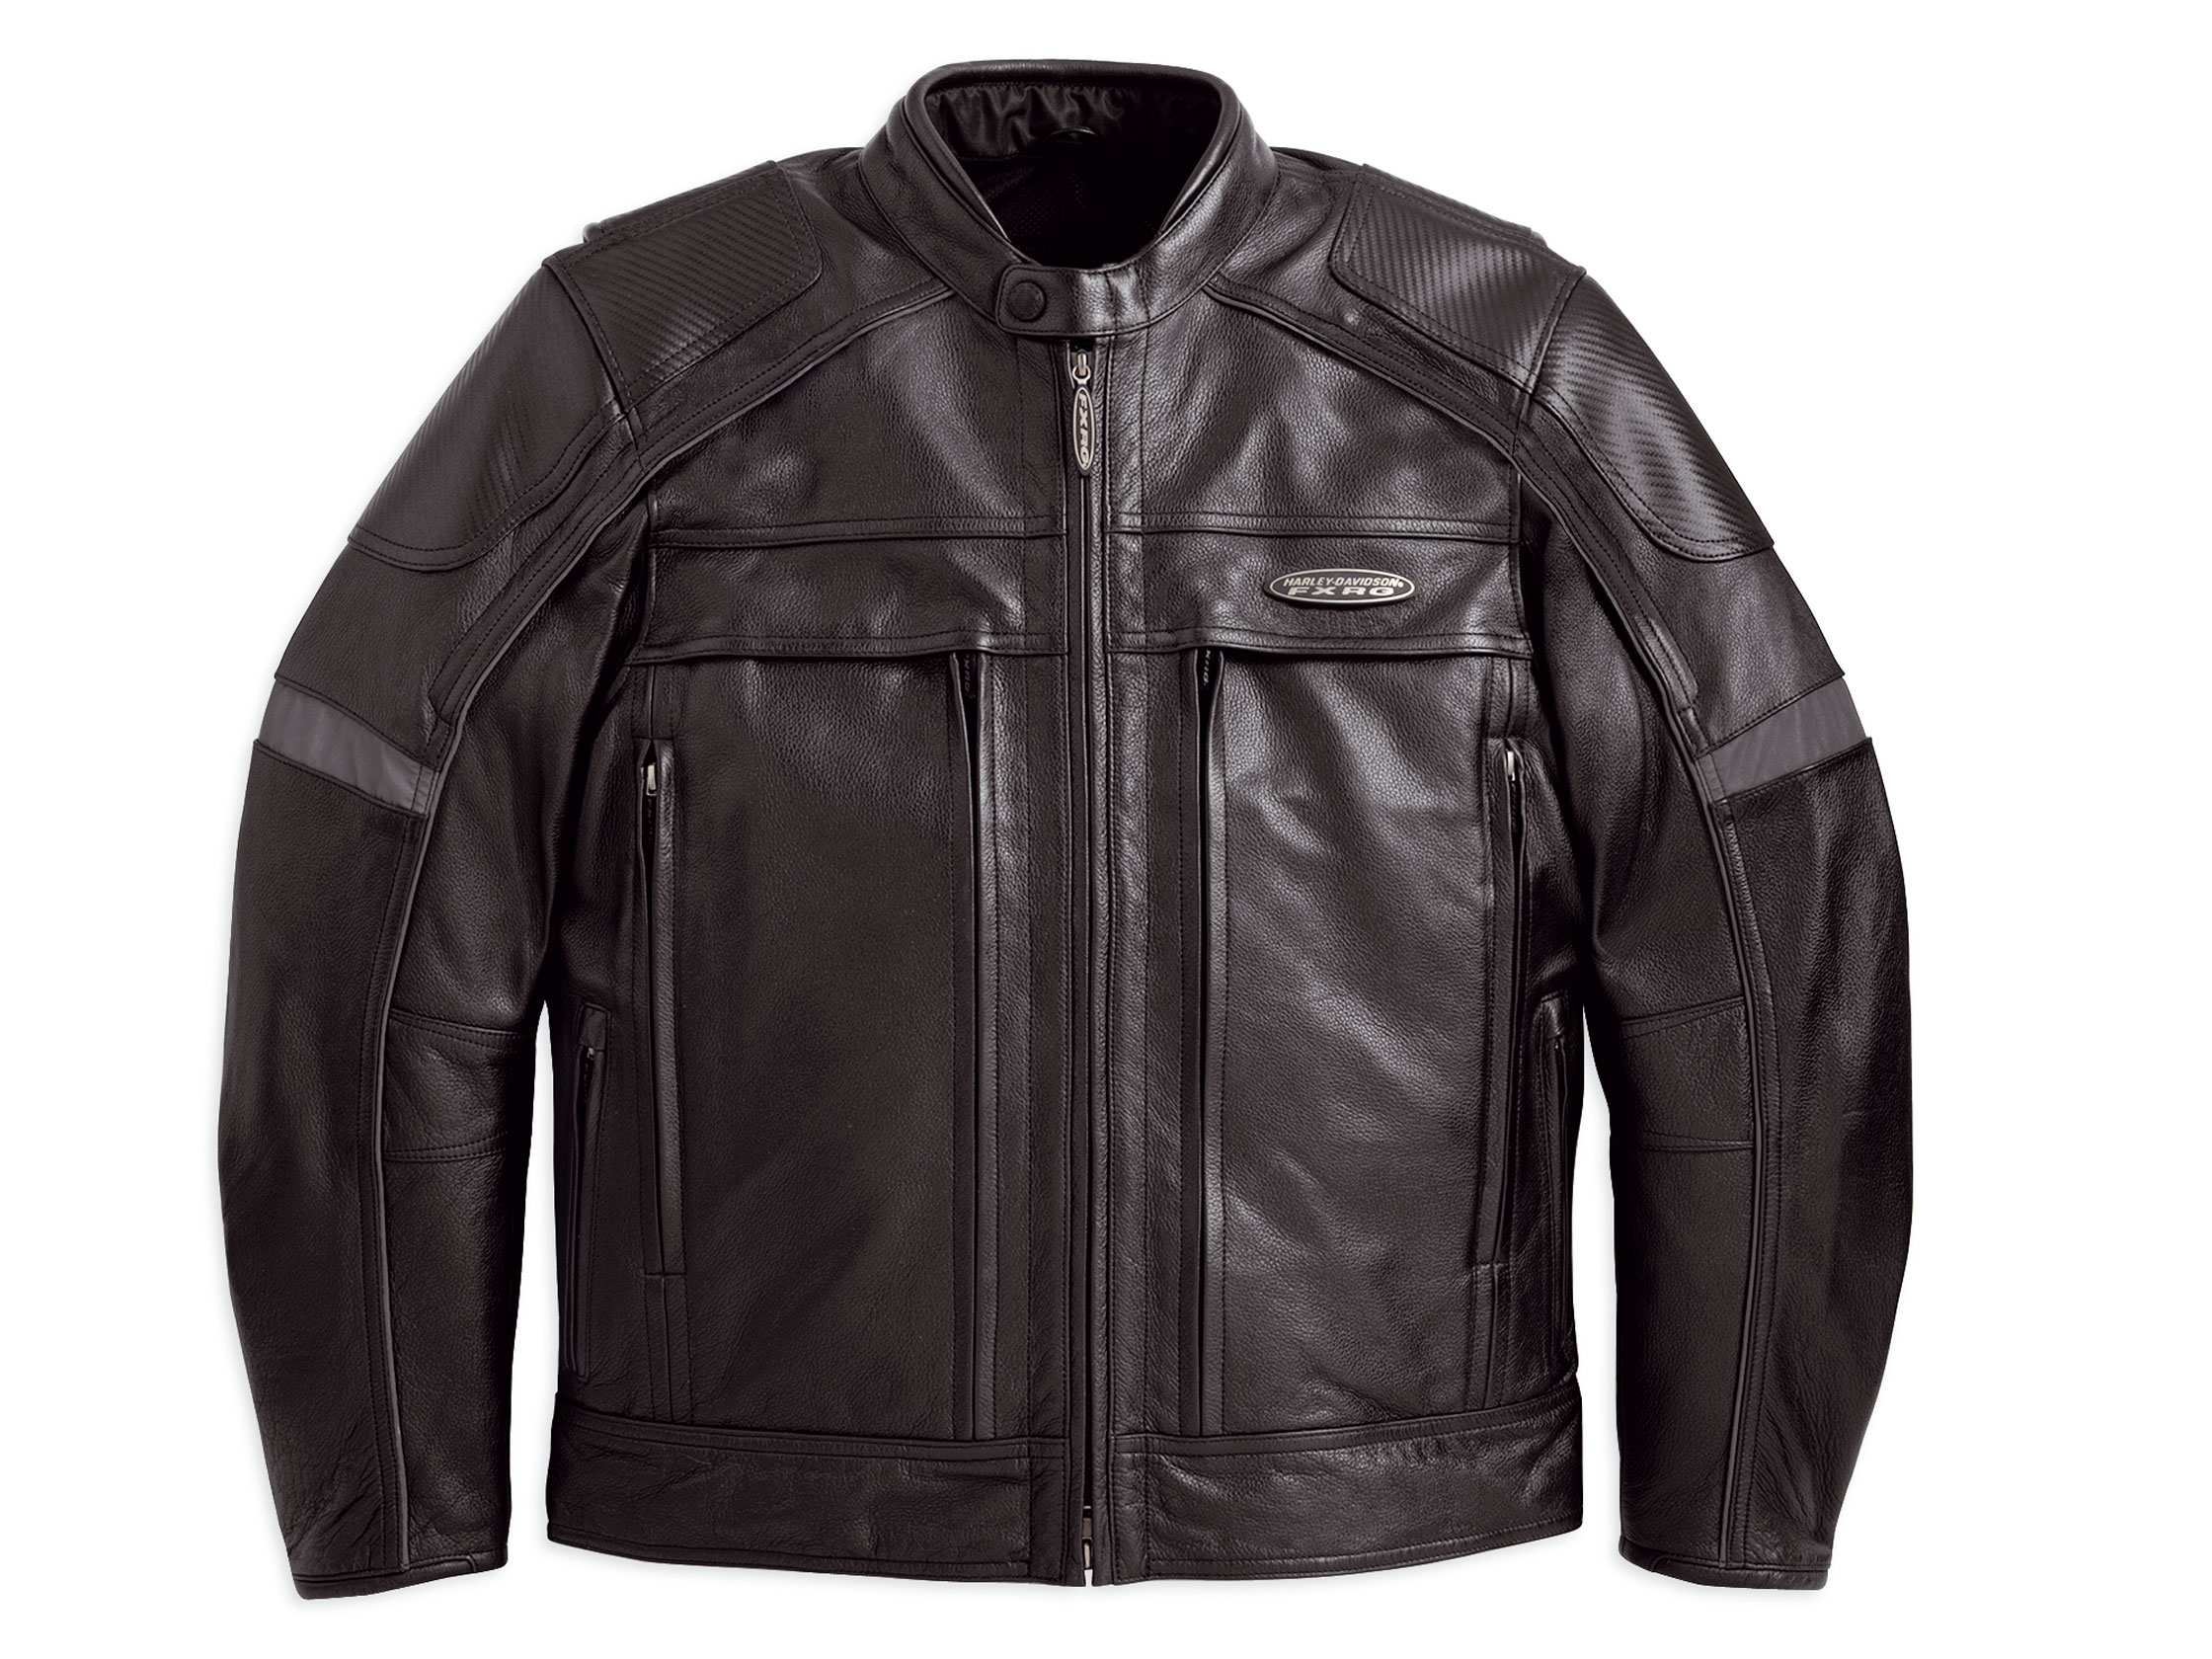 Harley-Davidson, Jackets & Coats, Harley Davidson Fxrg Leather Jacket